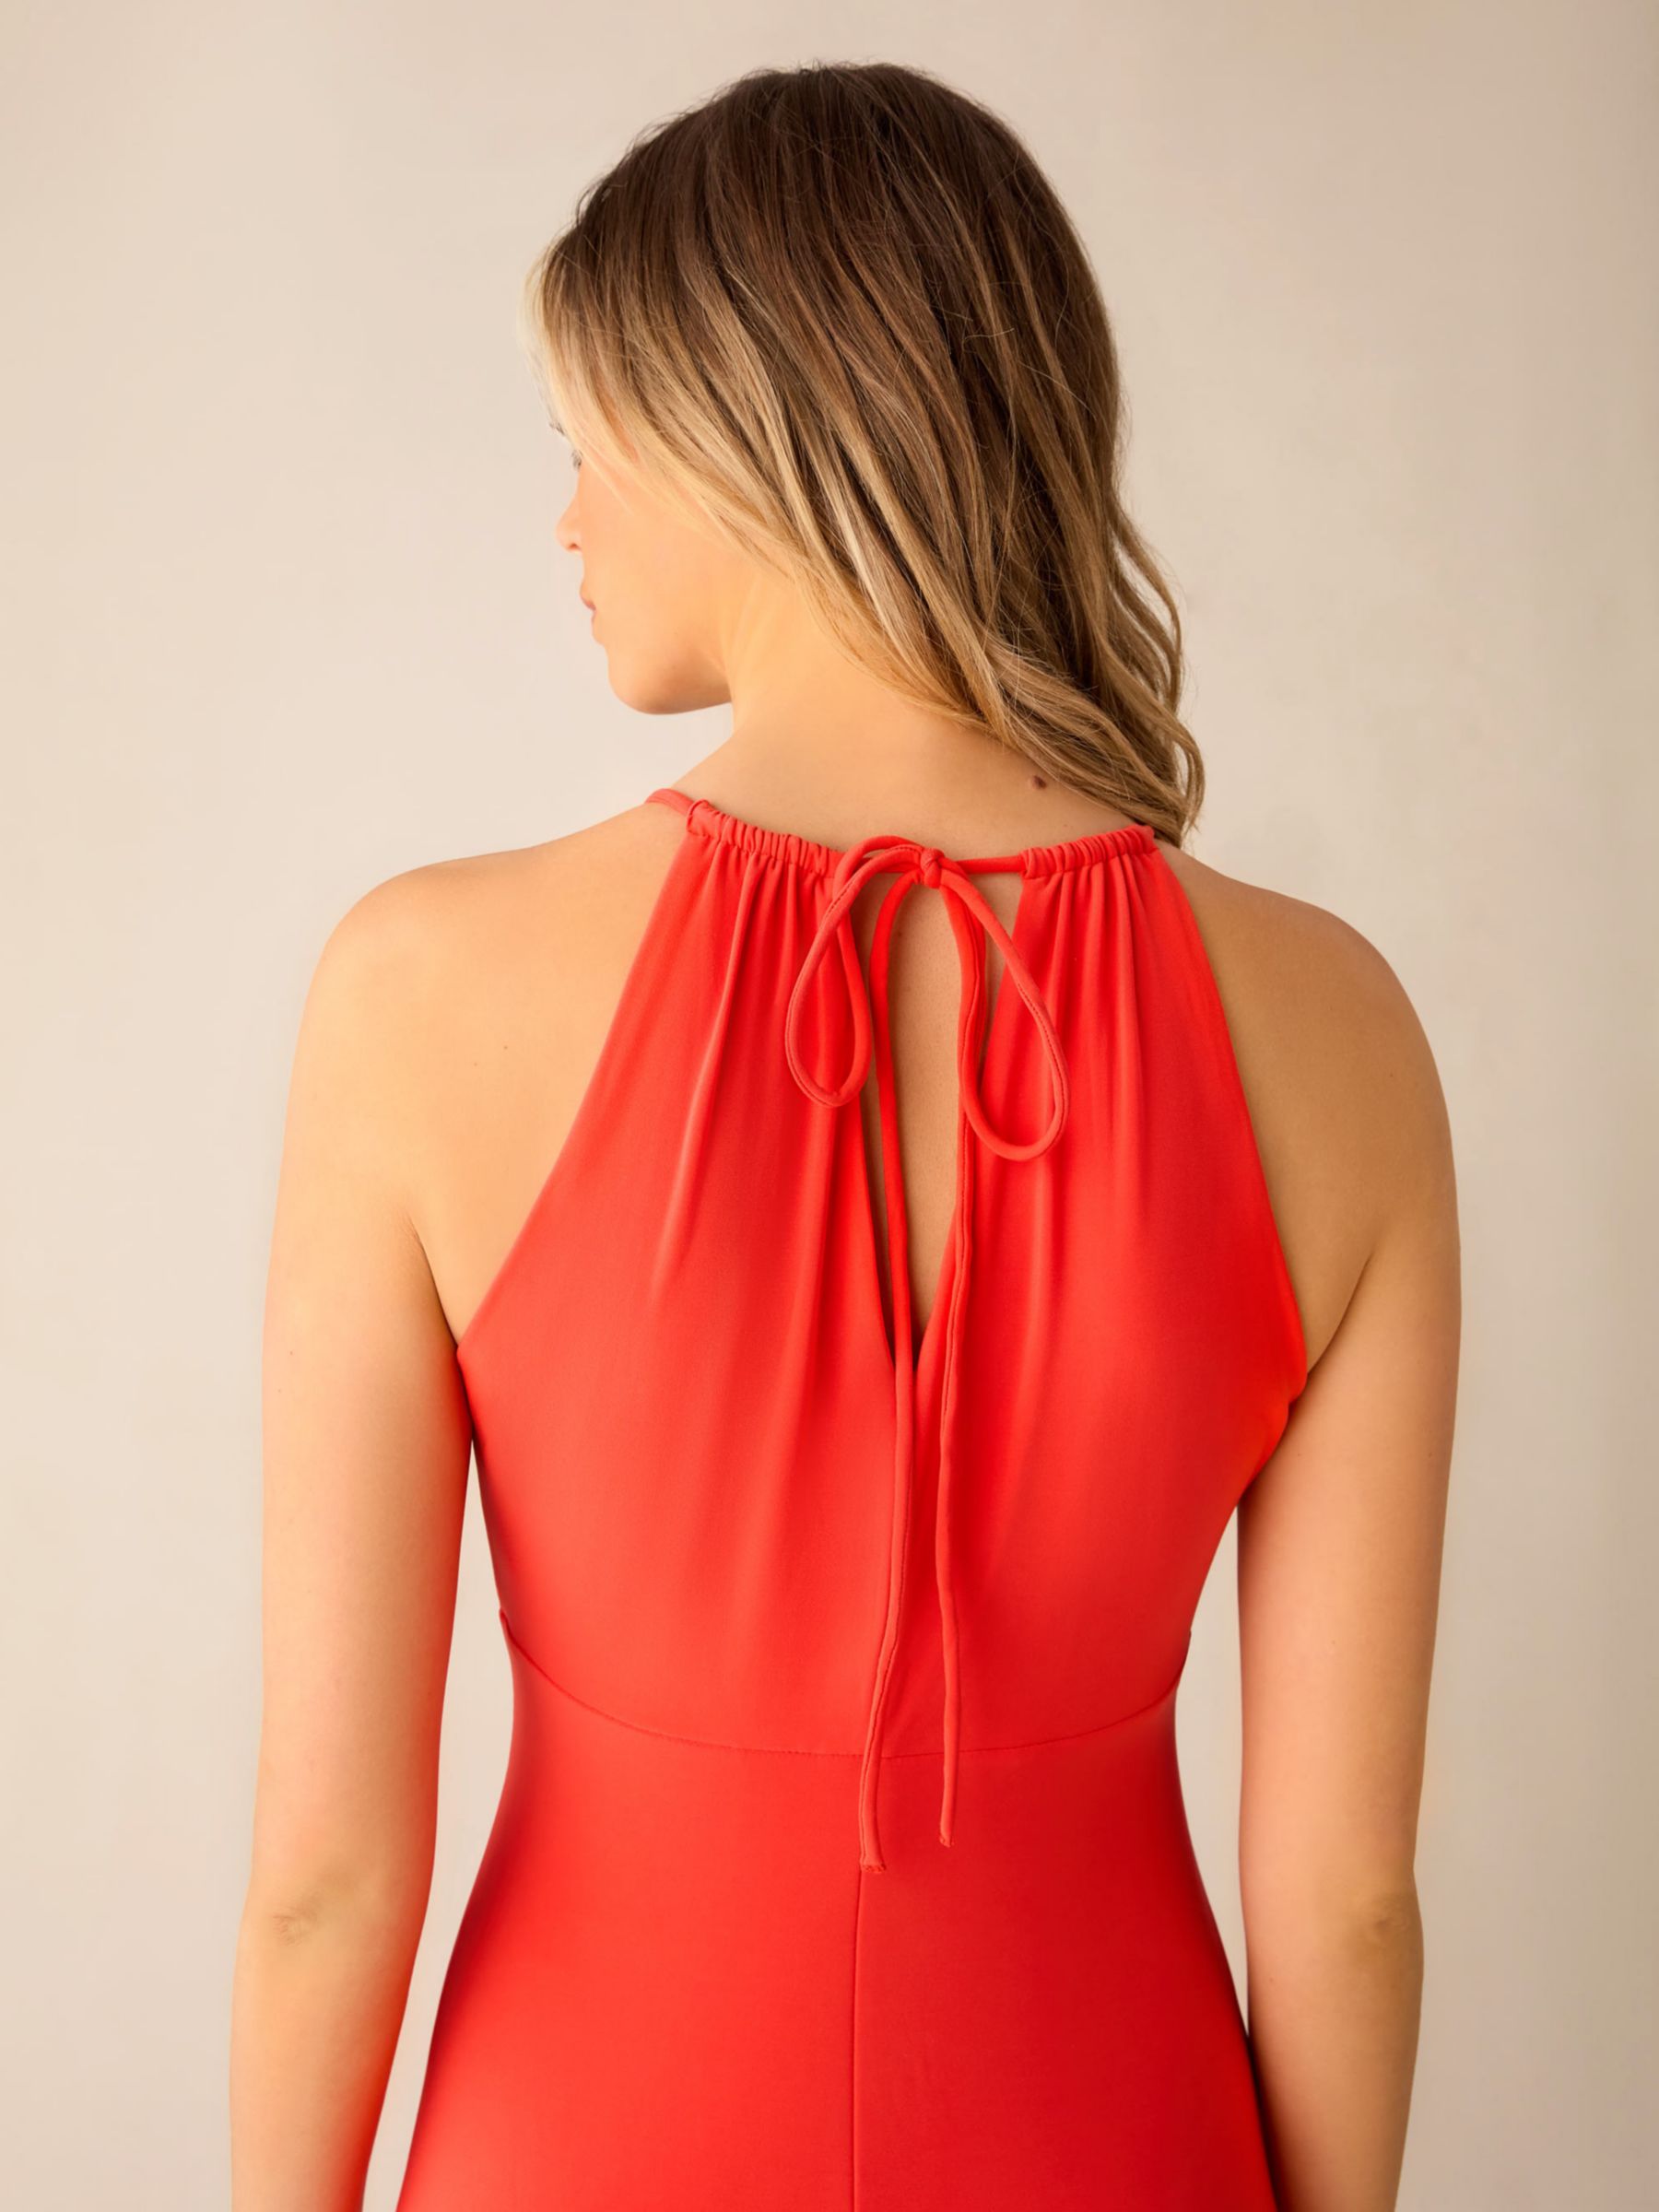 Ro&Zo Jersey Halterneck Midi Dress, Coral Red, 6